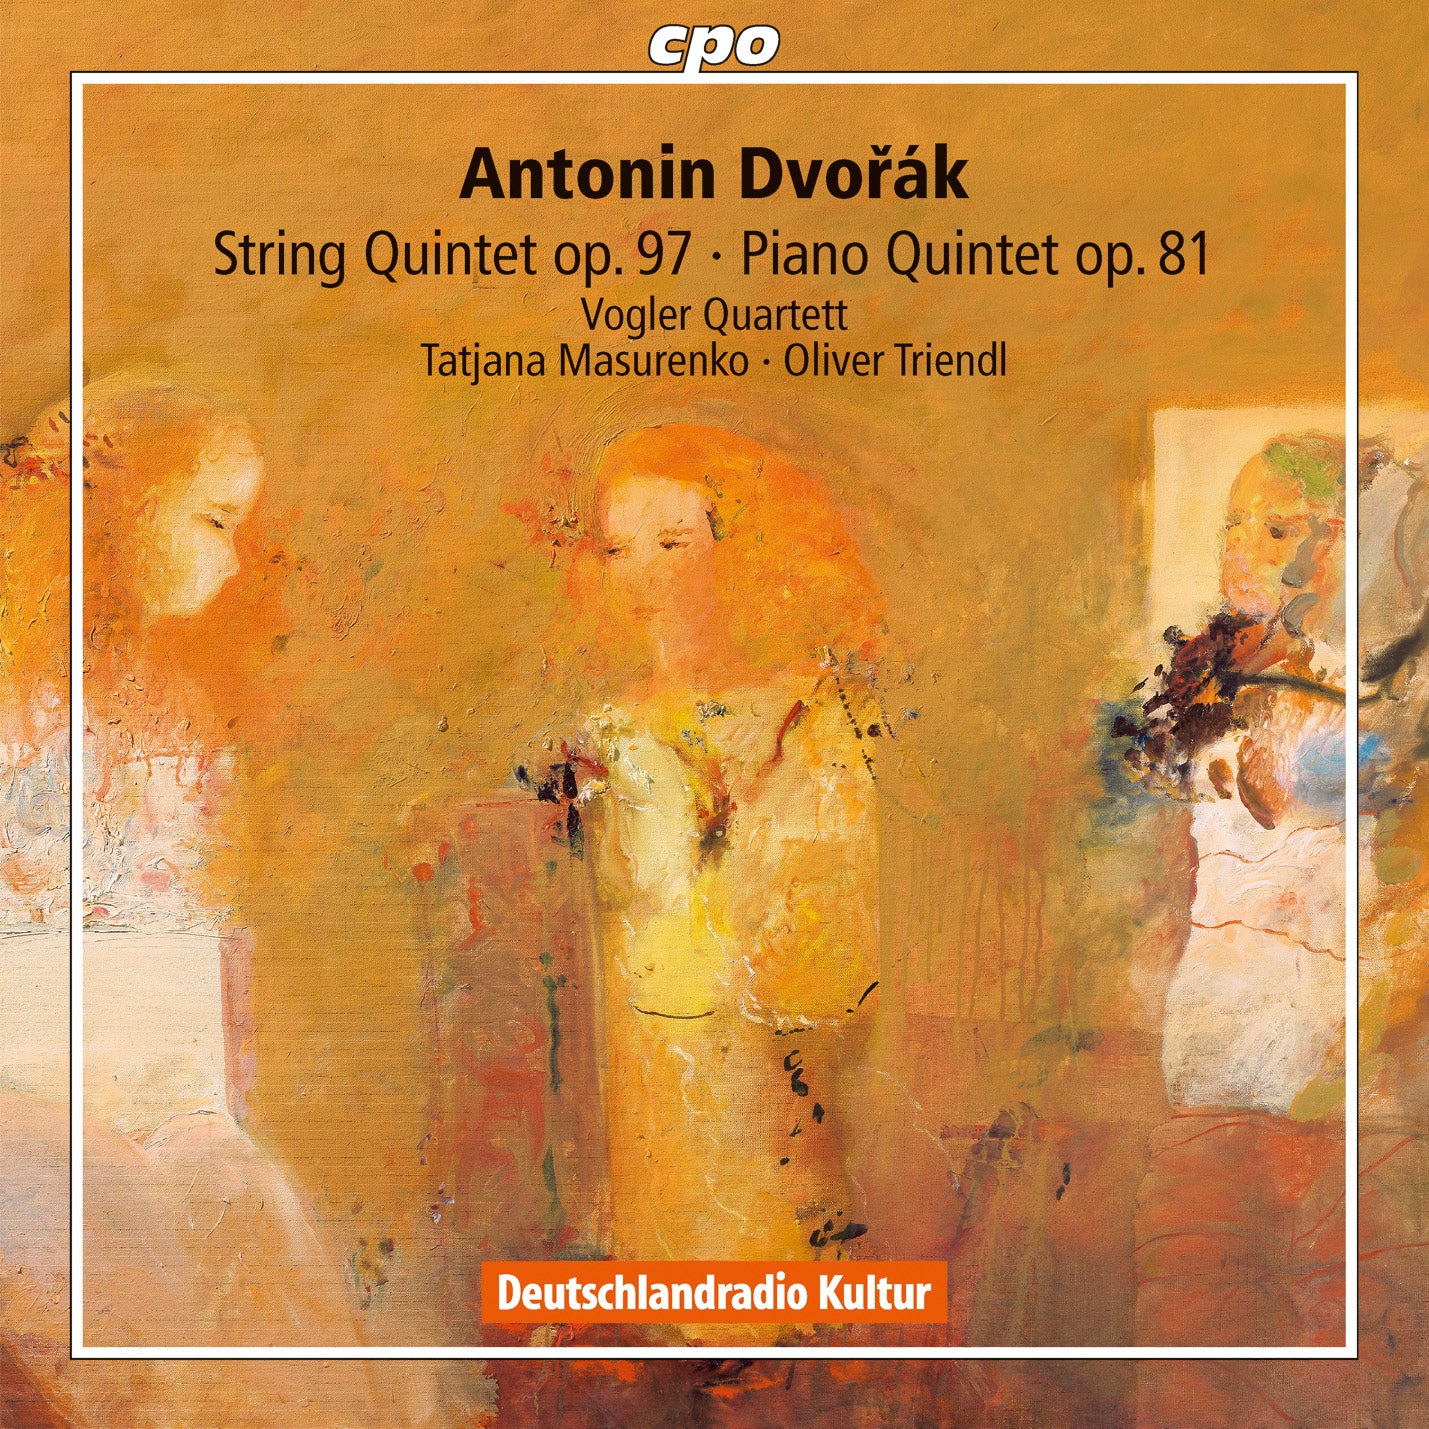 Dvorak: String Quintet & Piano Quintet / Masurenko, Triendl, Vogler Quartett